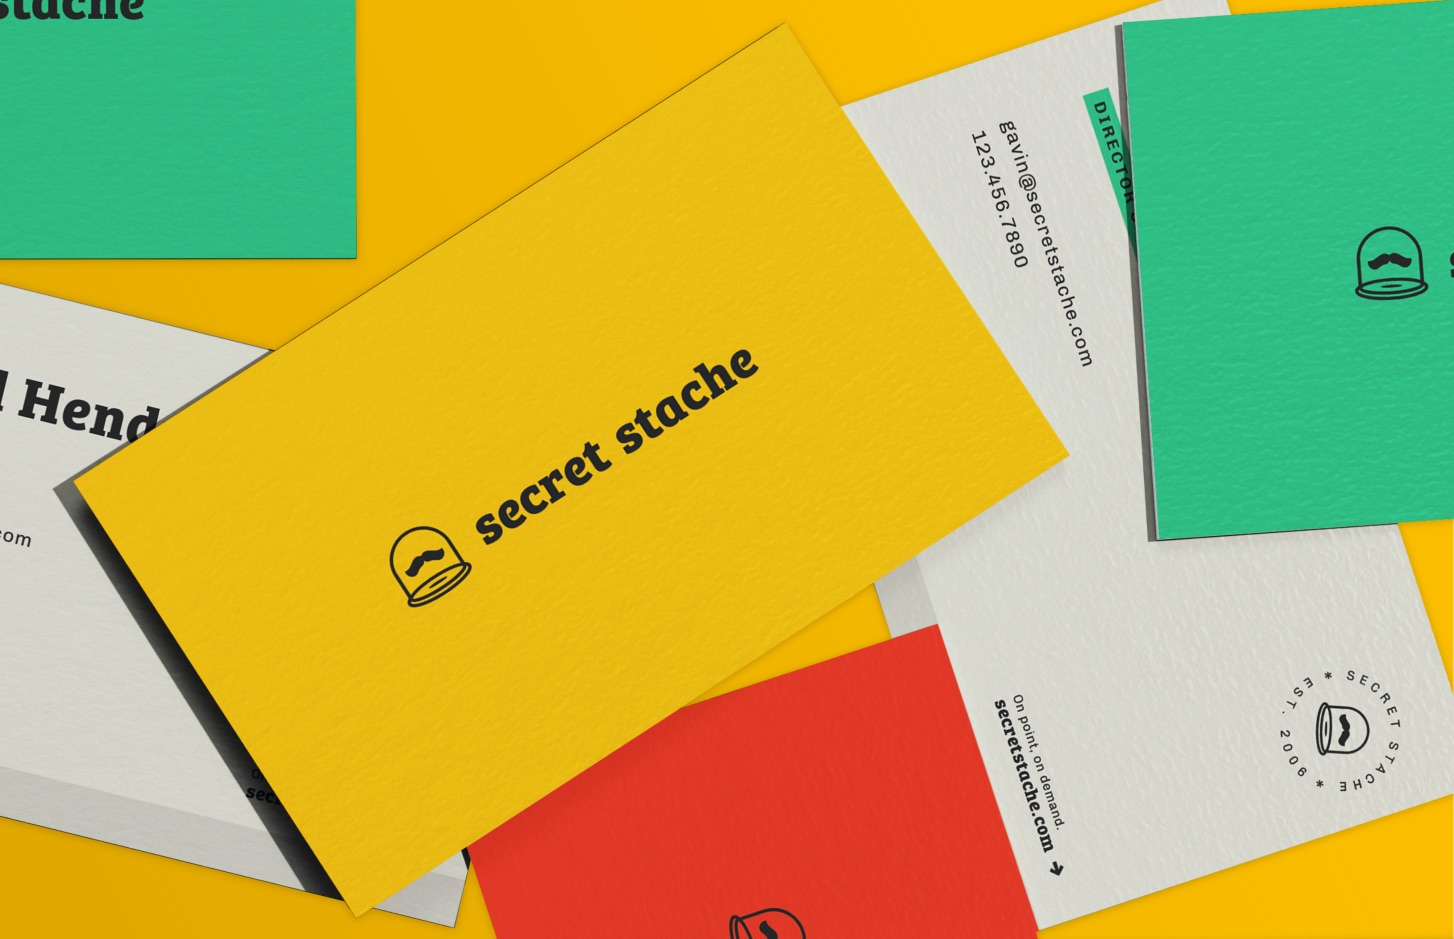 Secret Stache – a Web Development Brand Dressed to Impress Creative Agencies